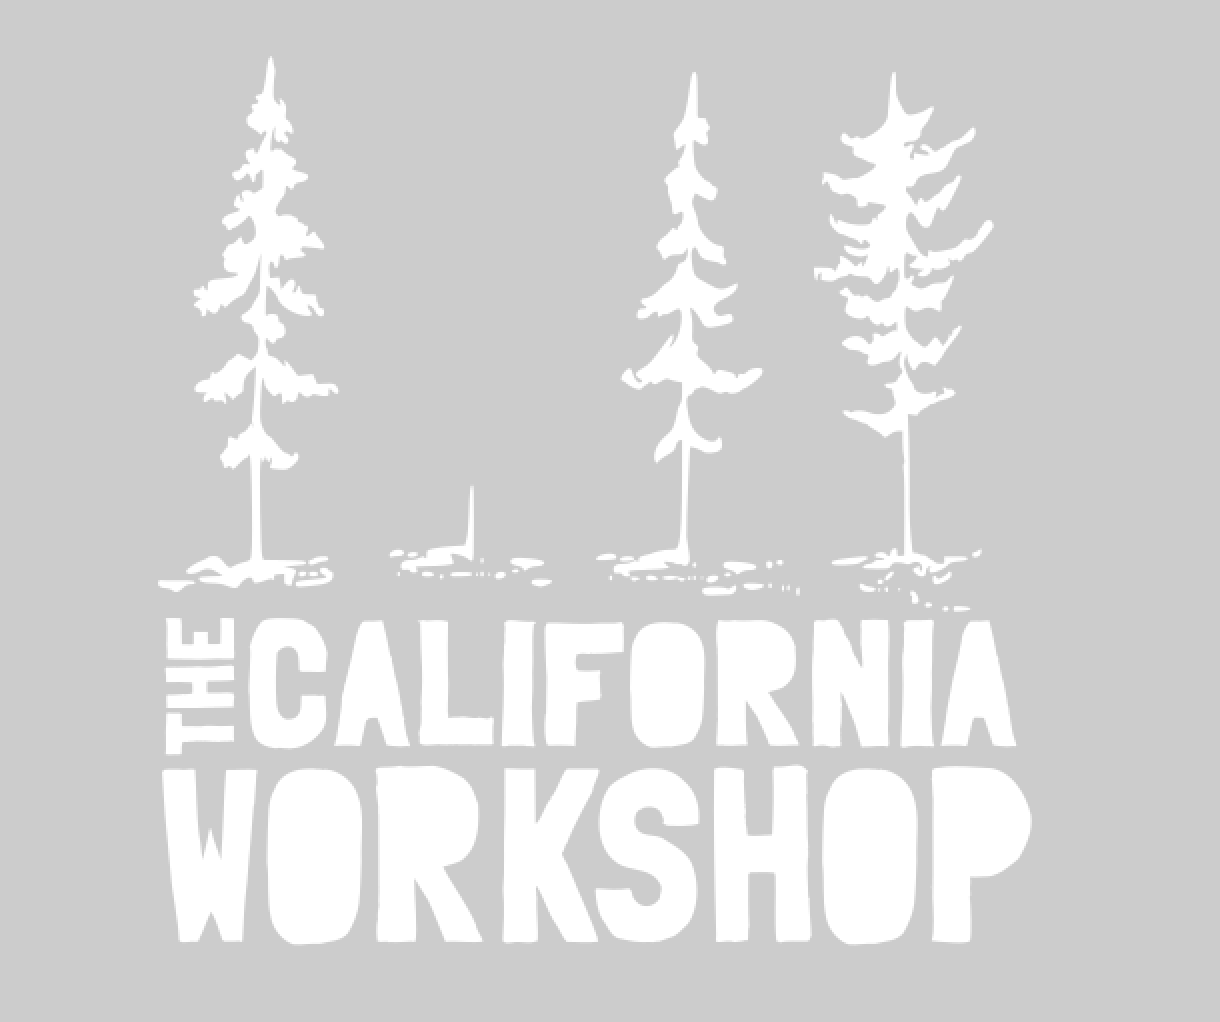 The California Workshop